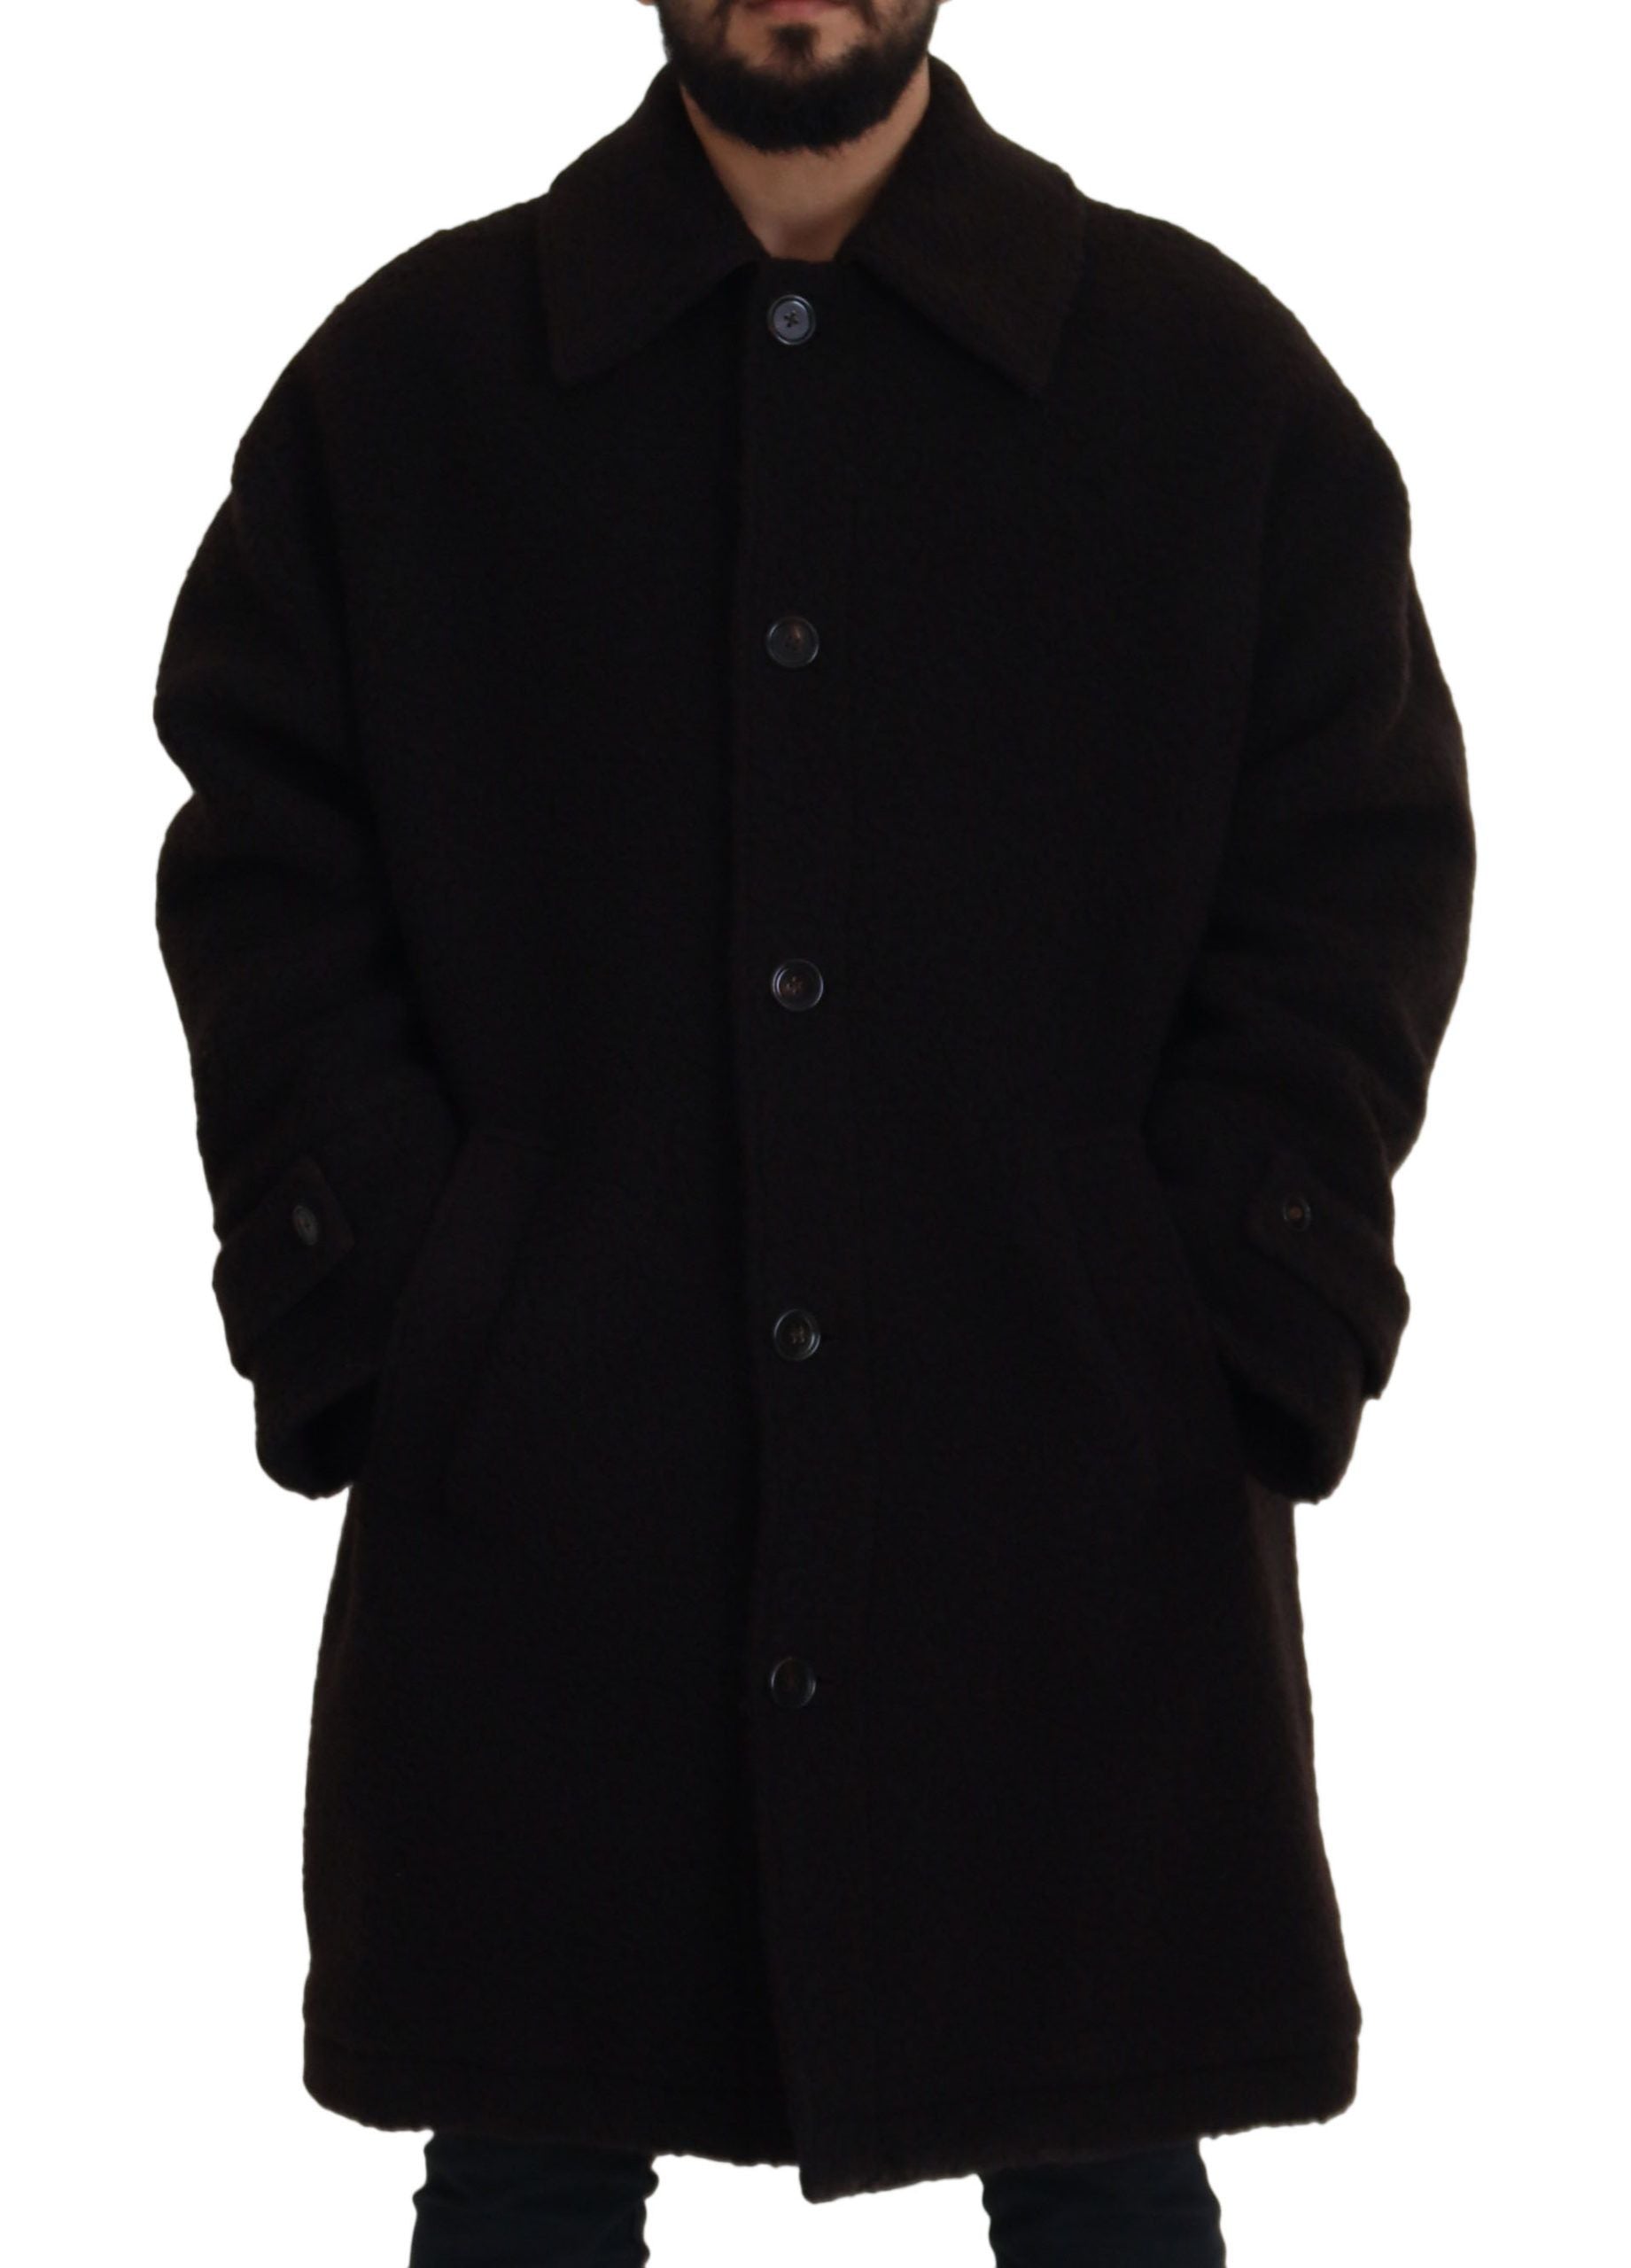 Dolce & Gabbana Elegante chaqueta negra en mezcla de lana de alpaca